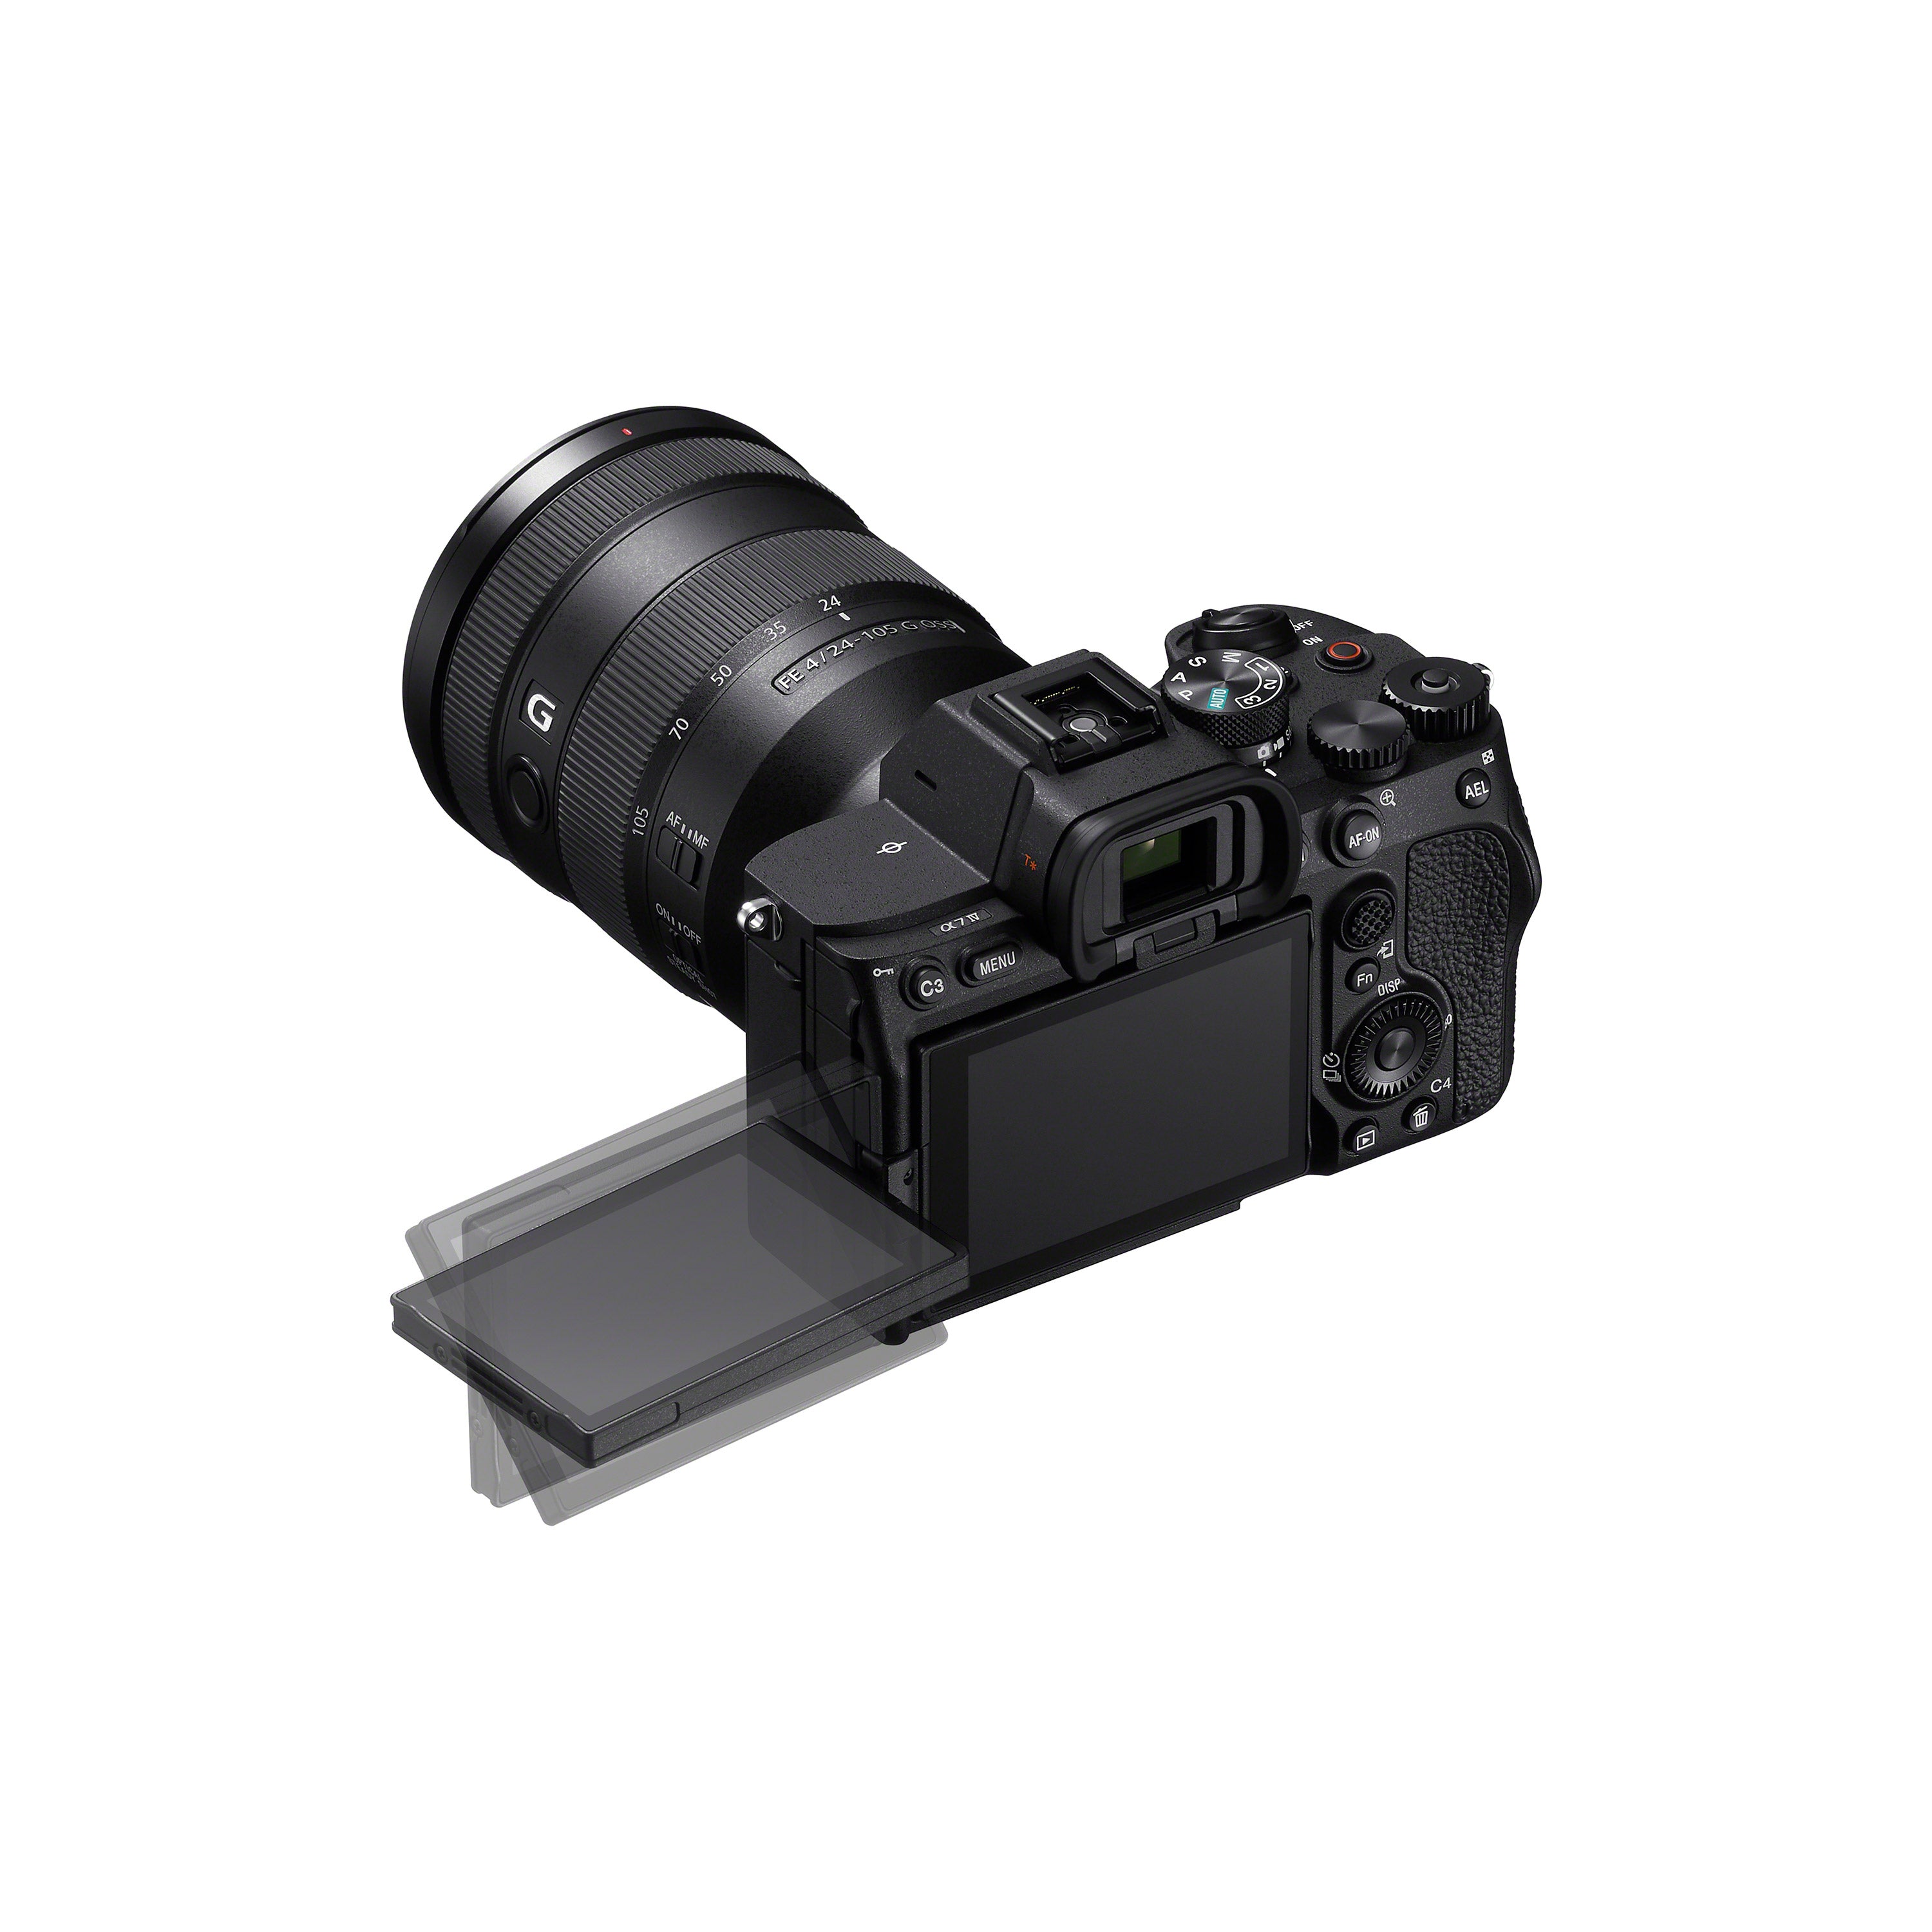  Sony Alpha 7 III  Full-Frame Mirrorless Camera (Fast